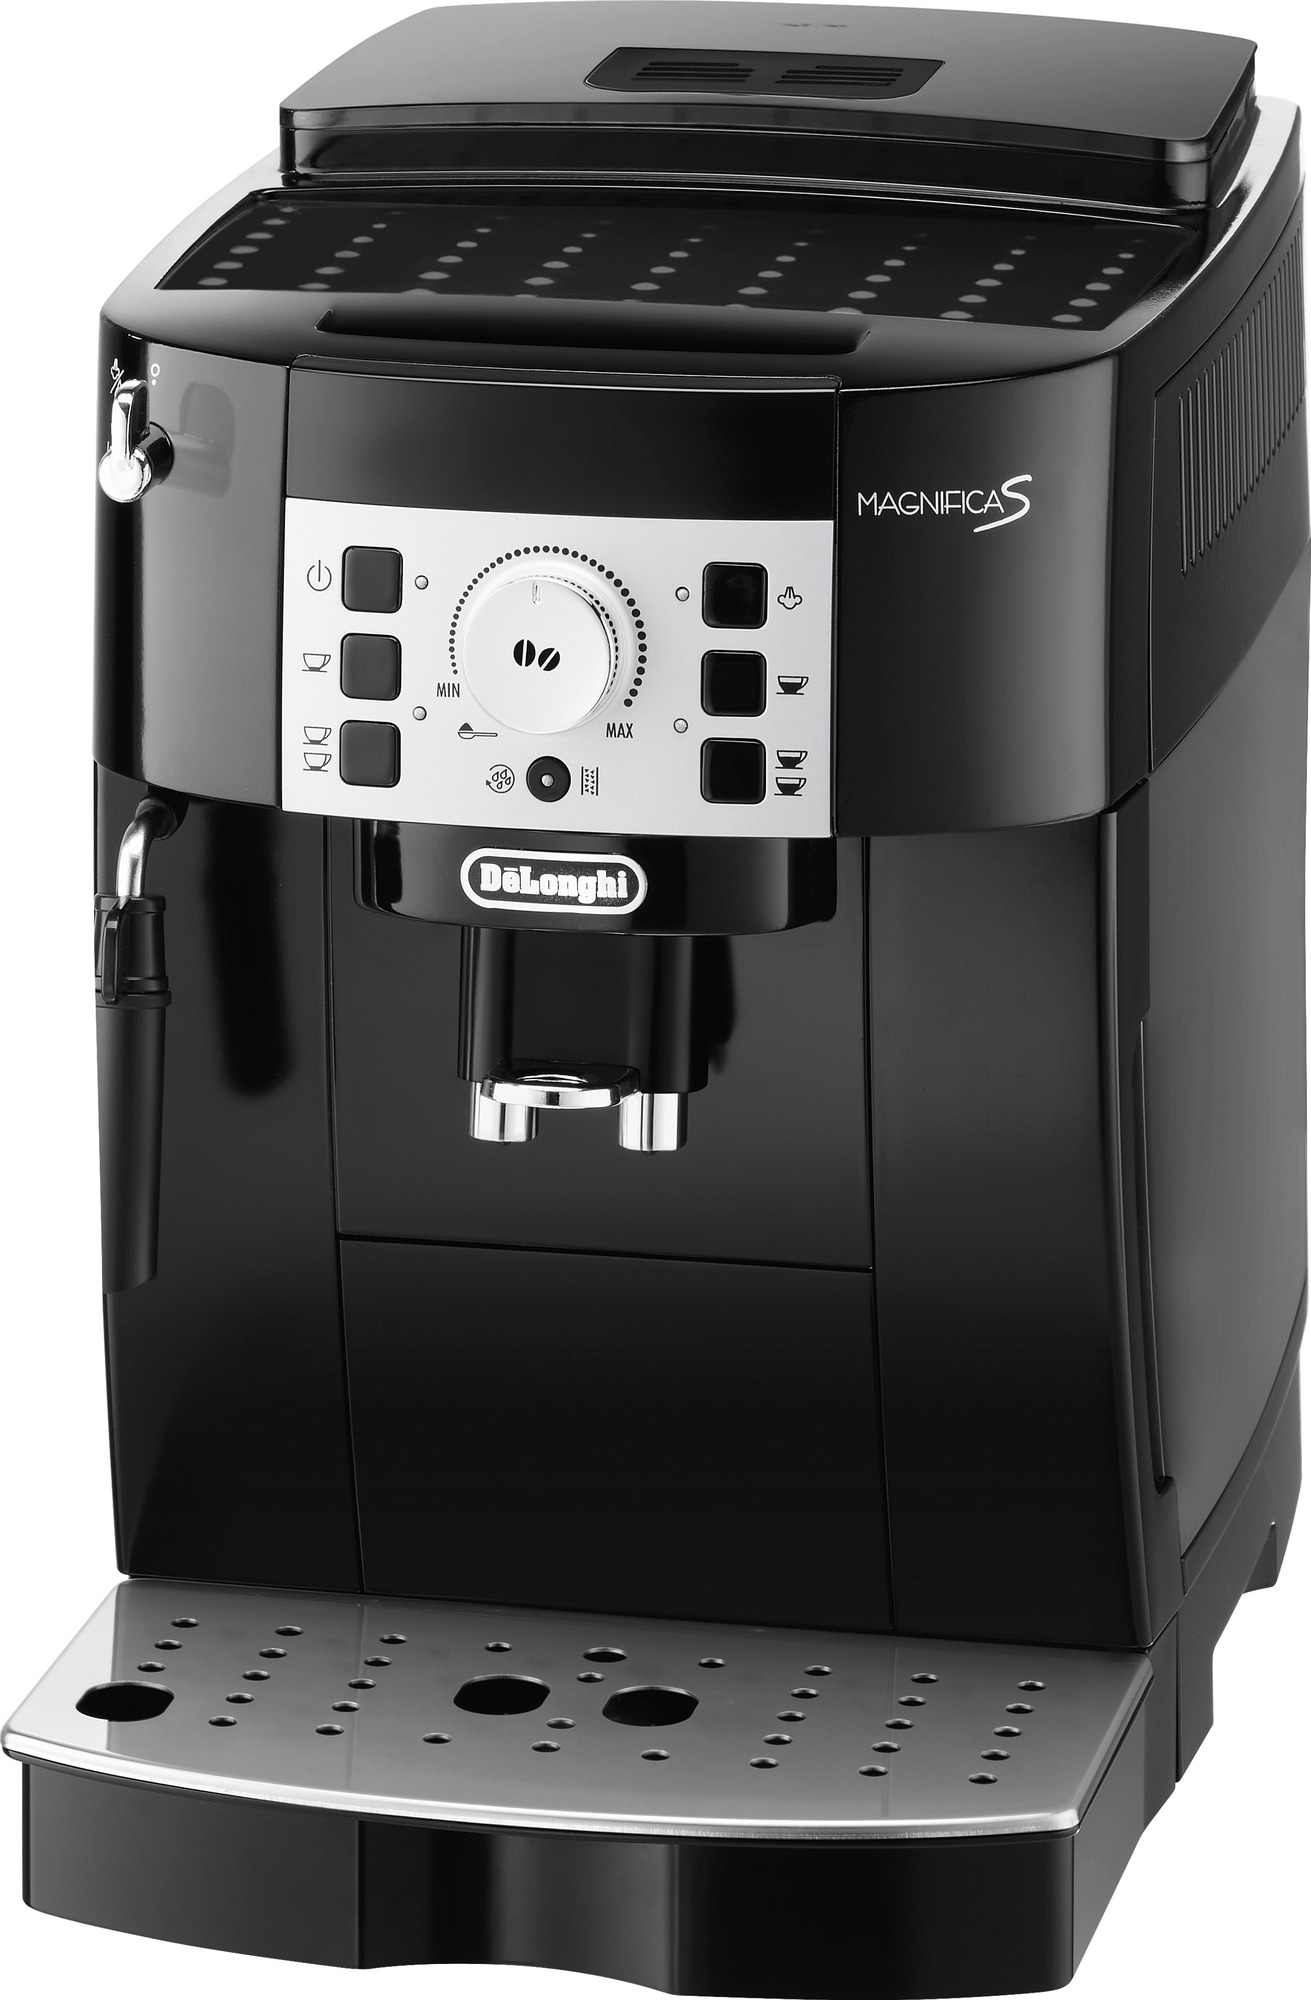 11: DeLonghi Magnifica ECAM22.115.B kaffemaskine